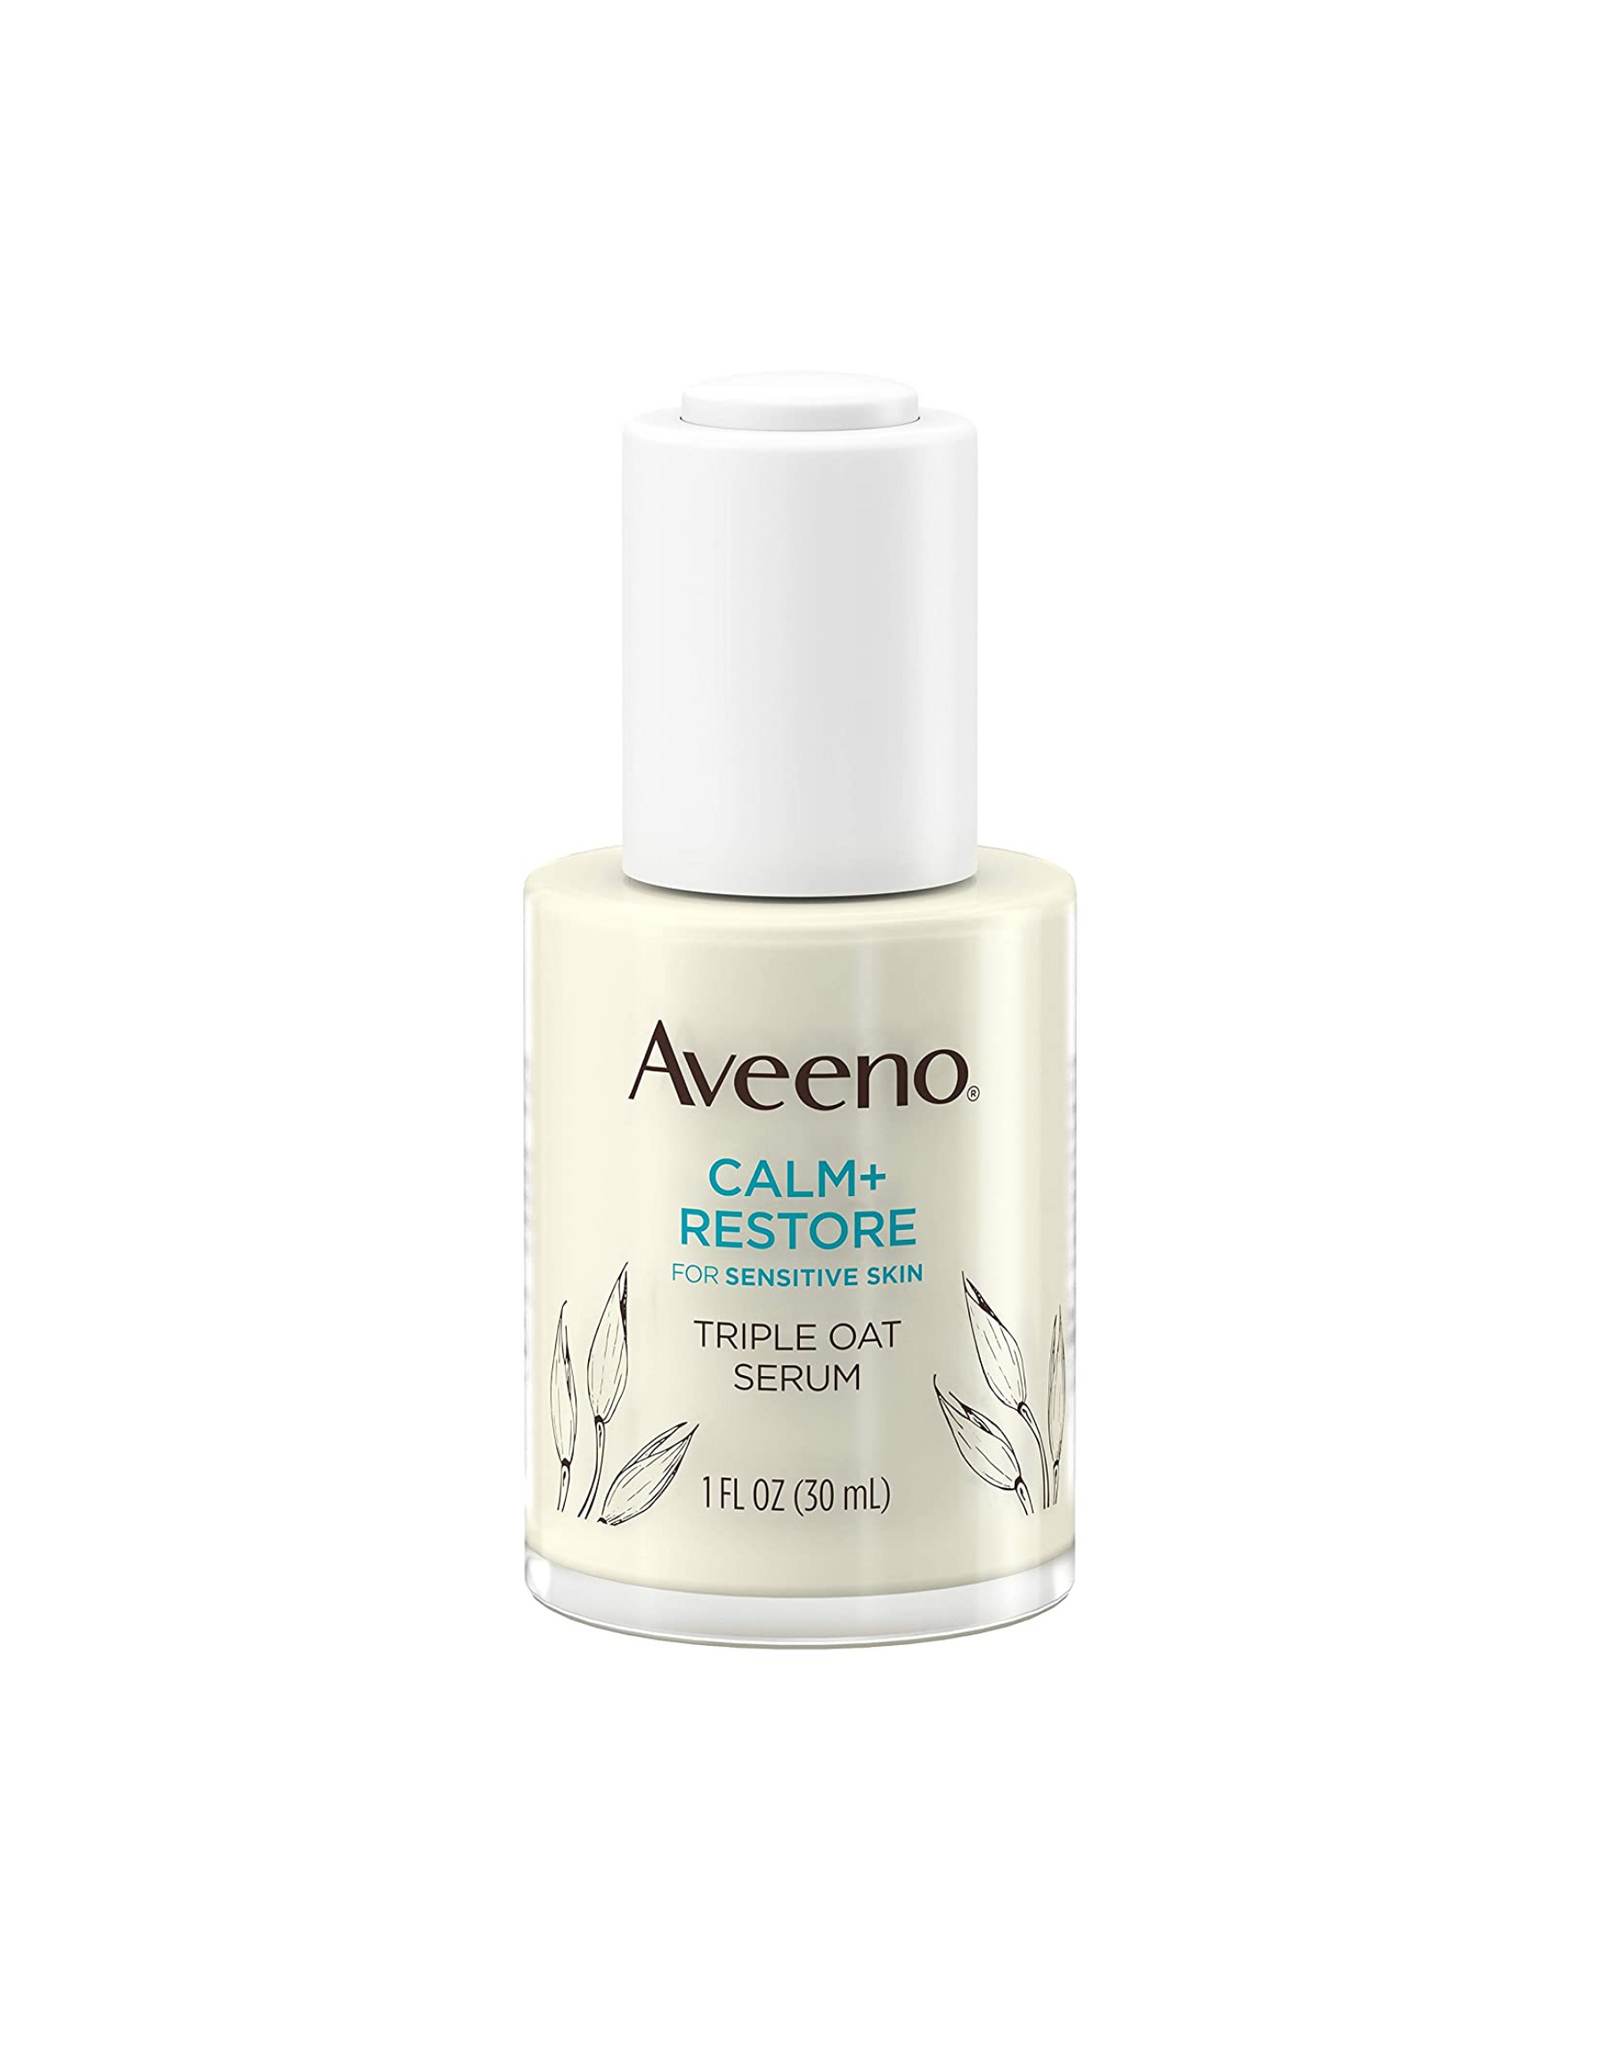 Aveeno Calm + Restore Triple Oat Serum for Sensitive Skin, 1 fl oz